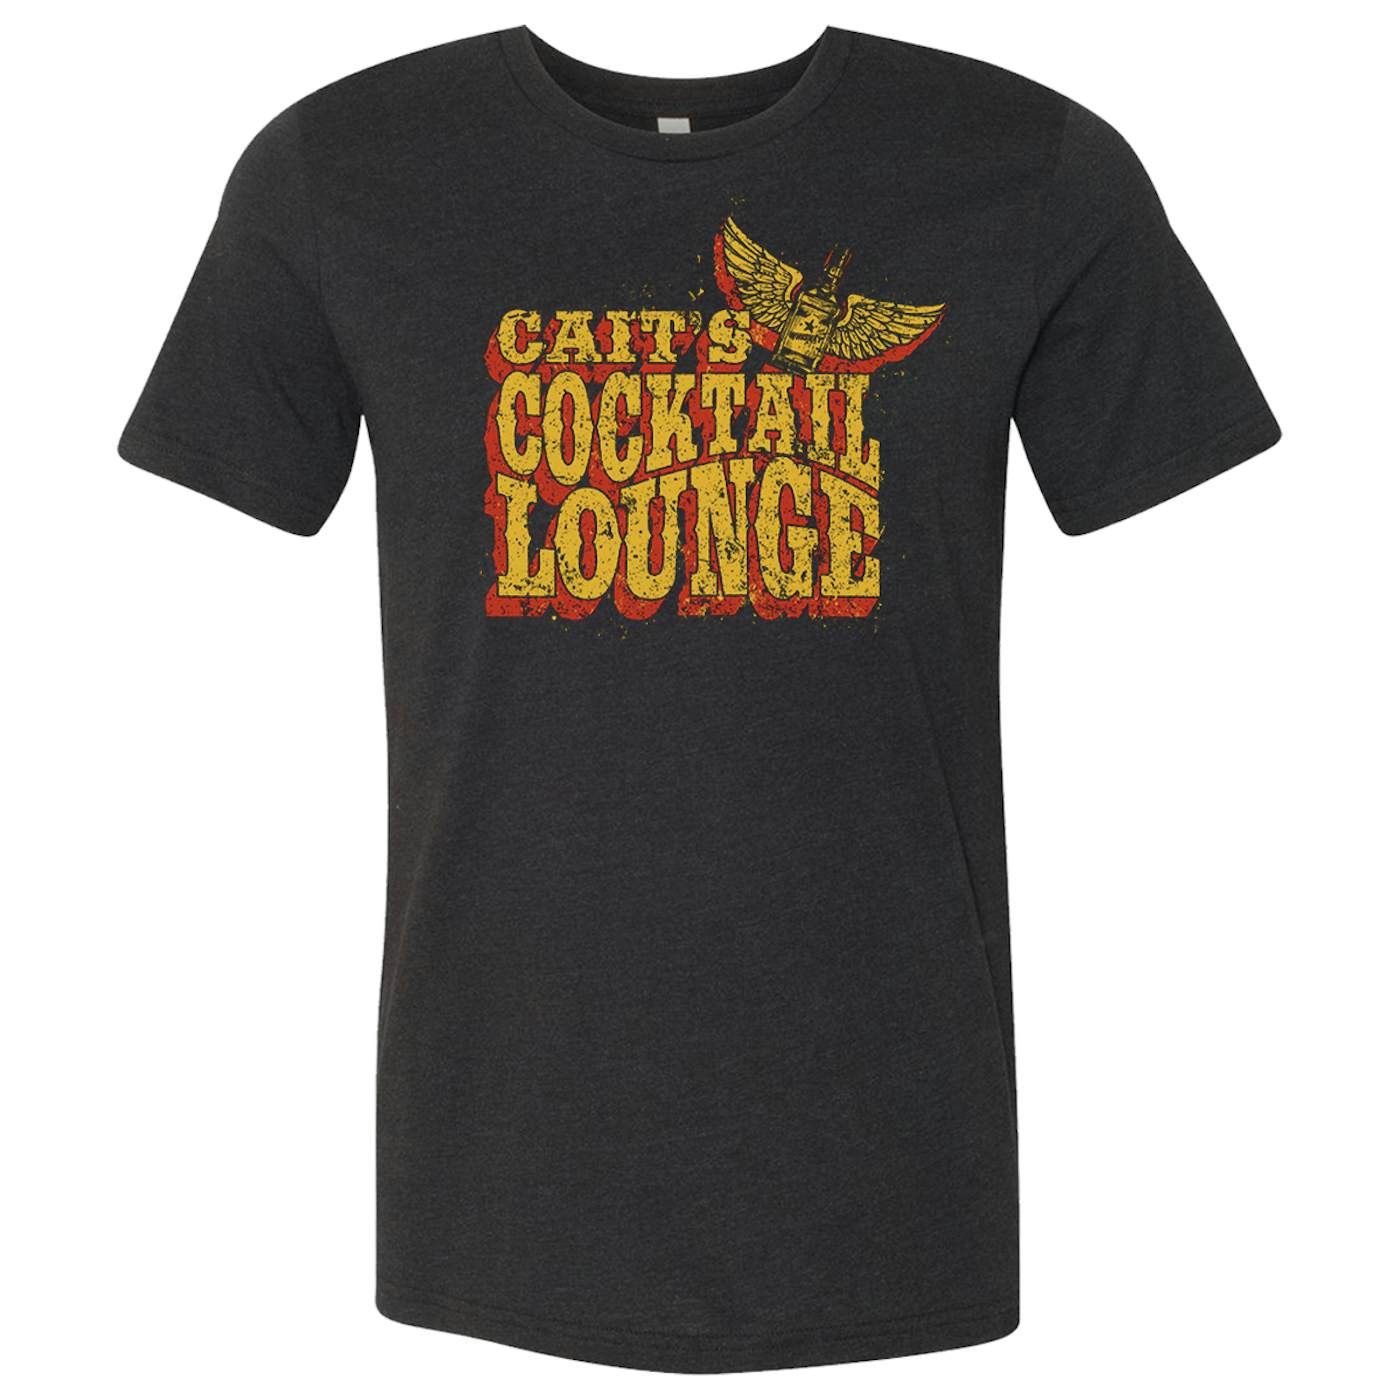 Caitlyn Smith Cait's Cocktail Lounge Tee